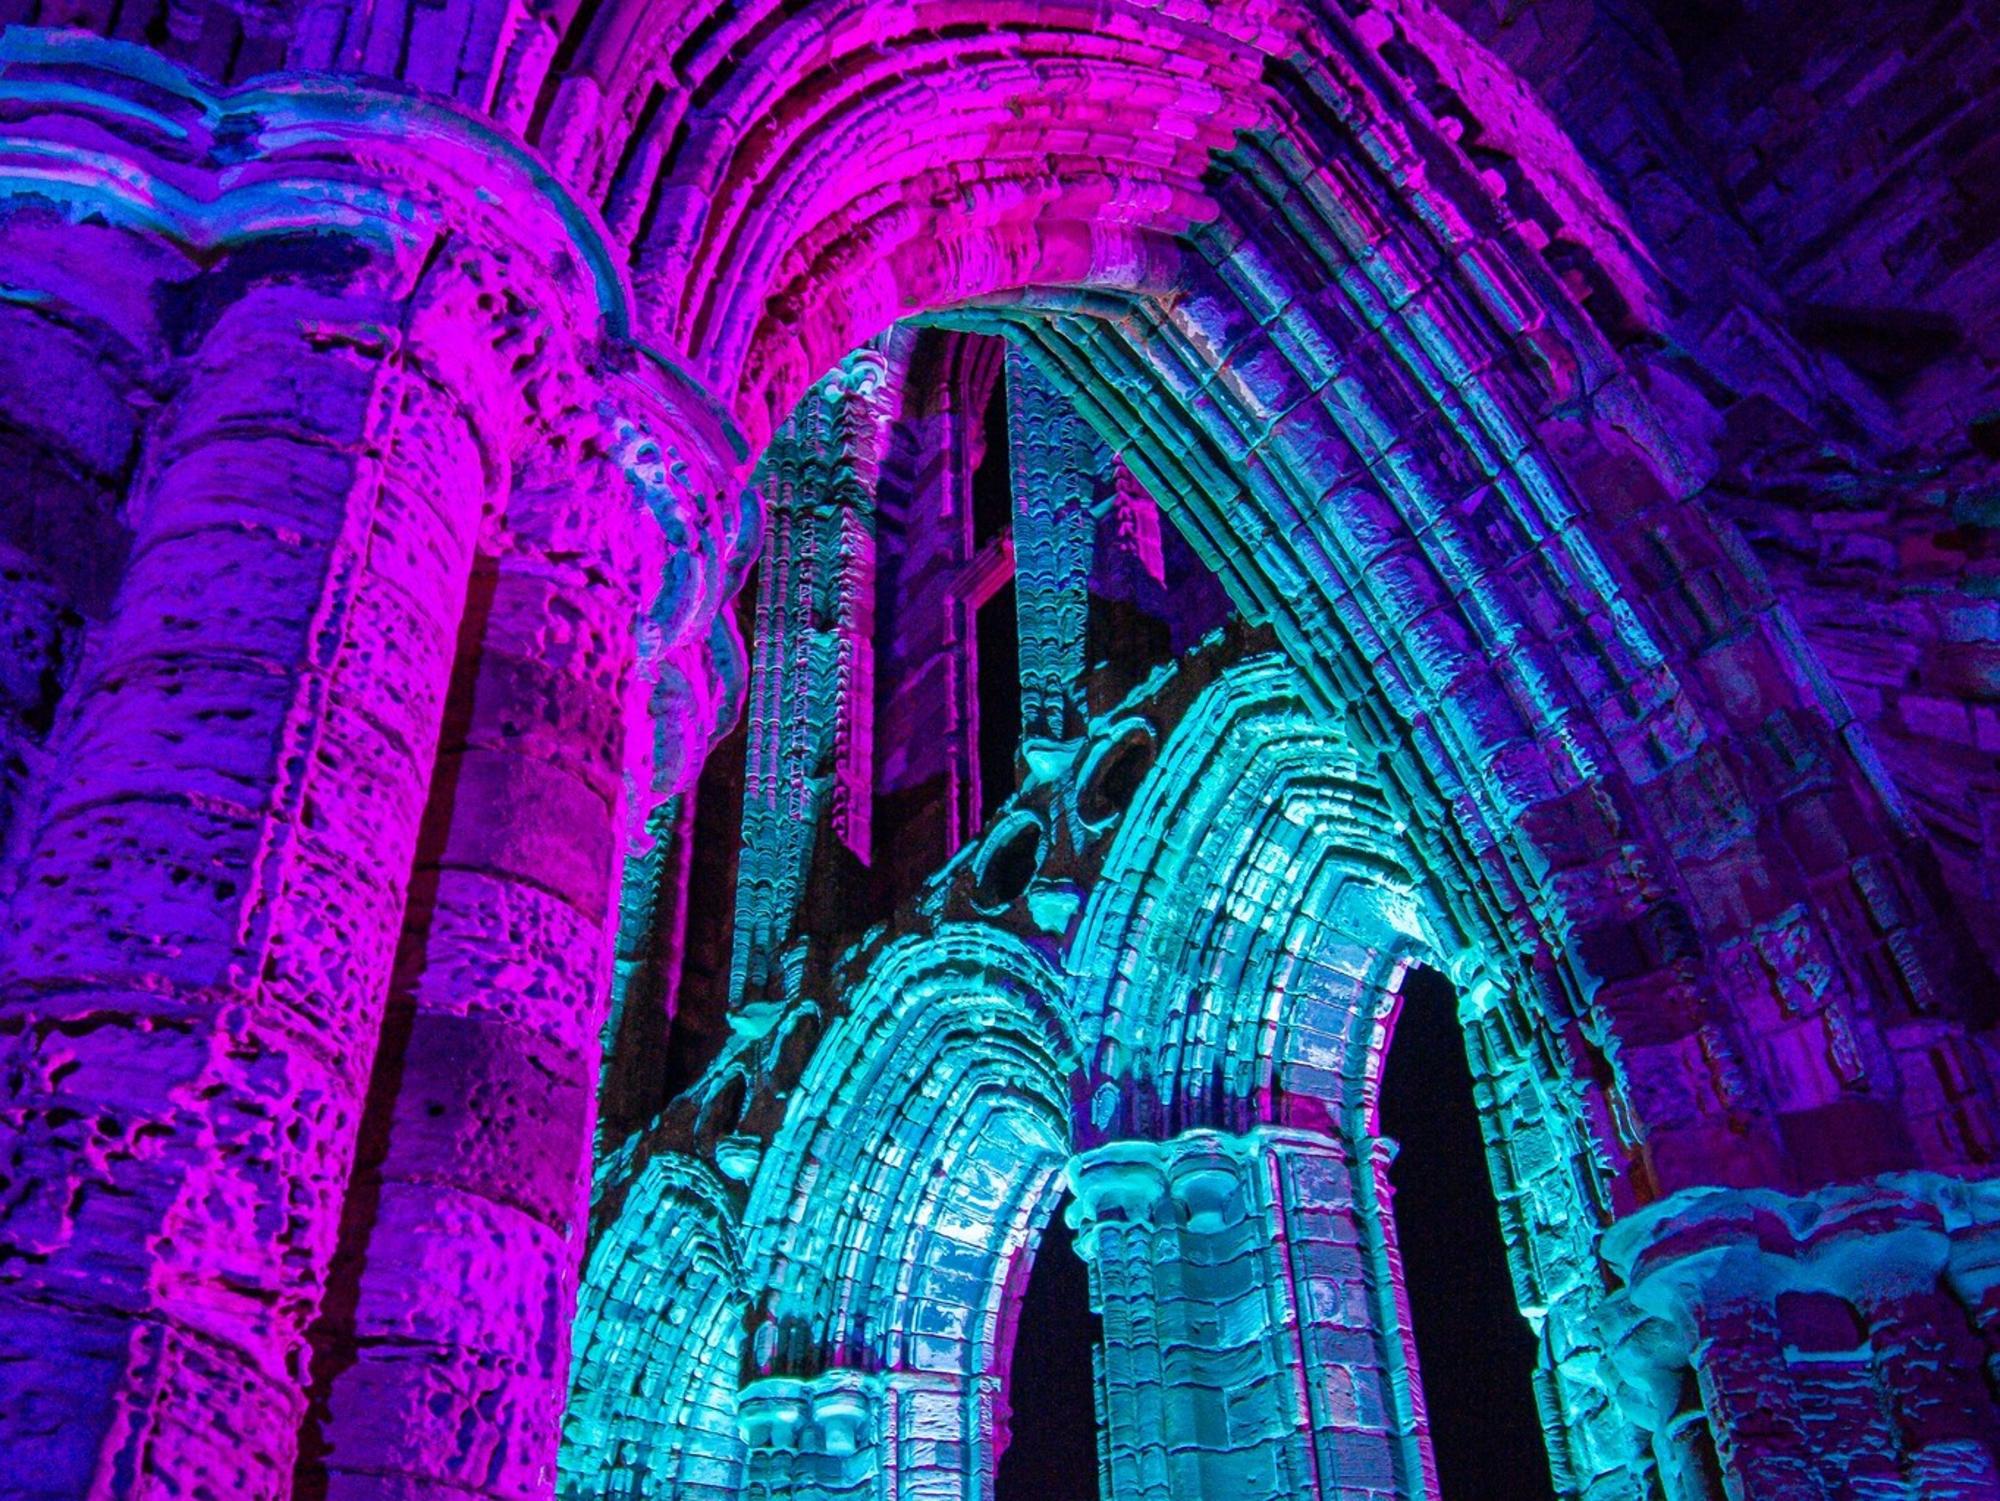 Whitby Abbey Illuminated Arches